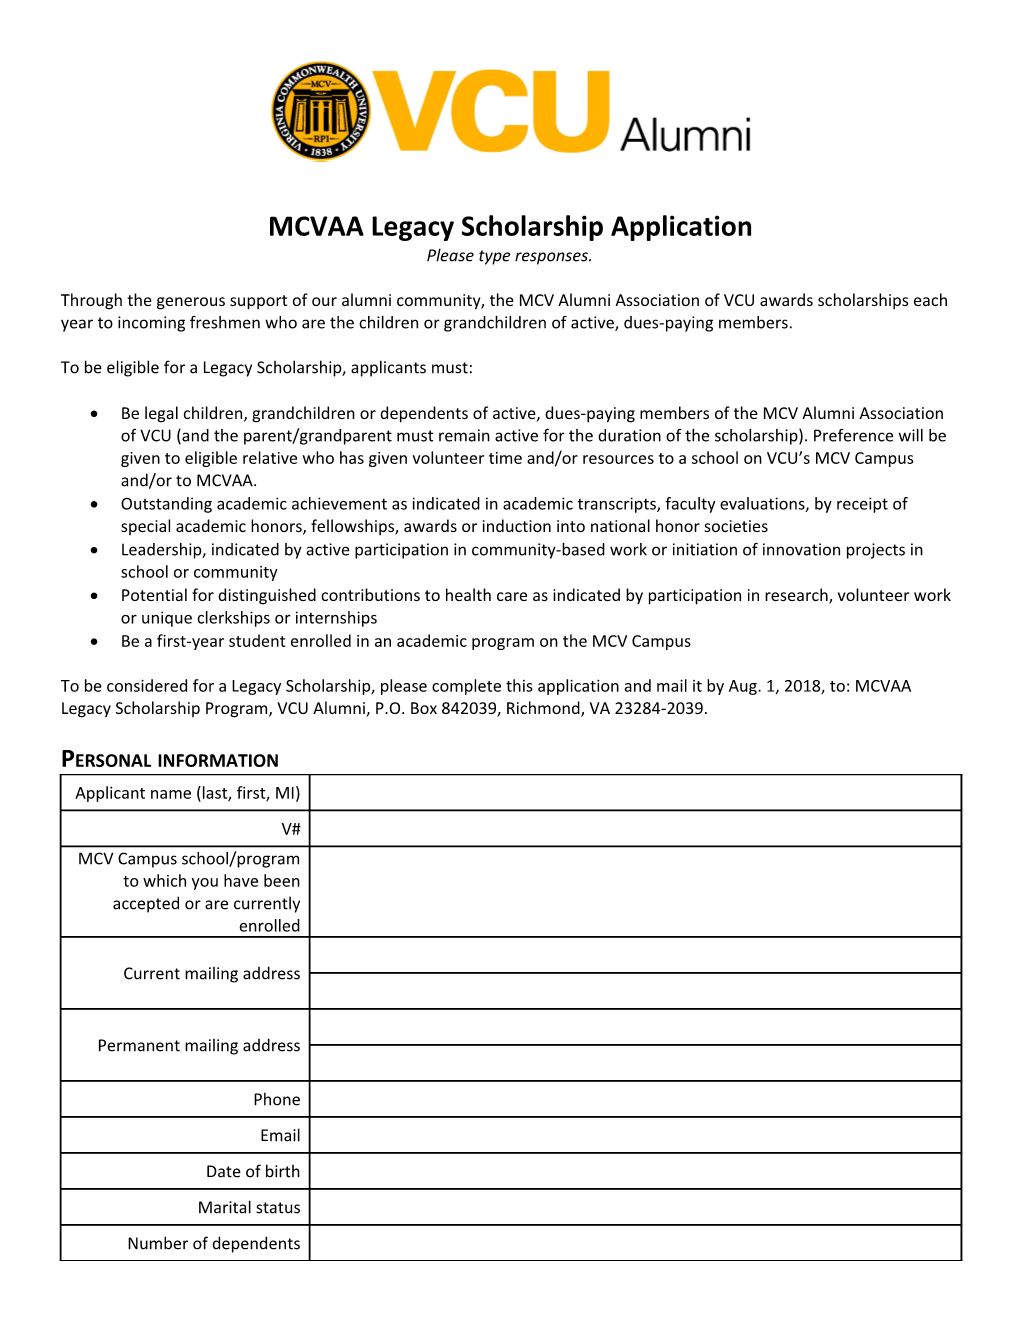 MCVAA Legacy Scholarship Application